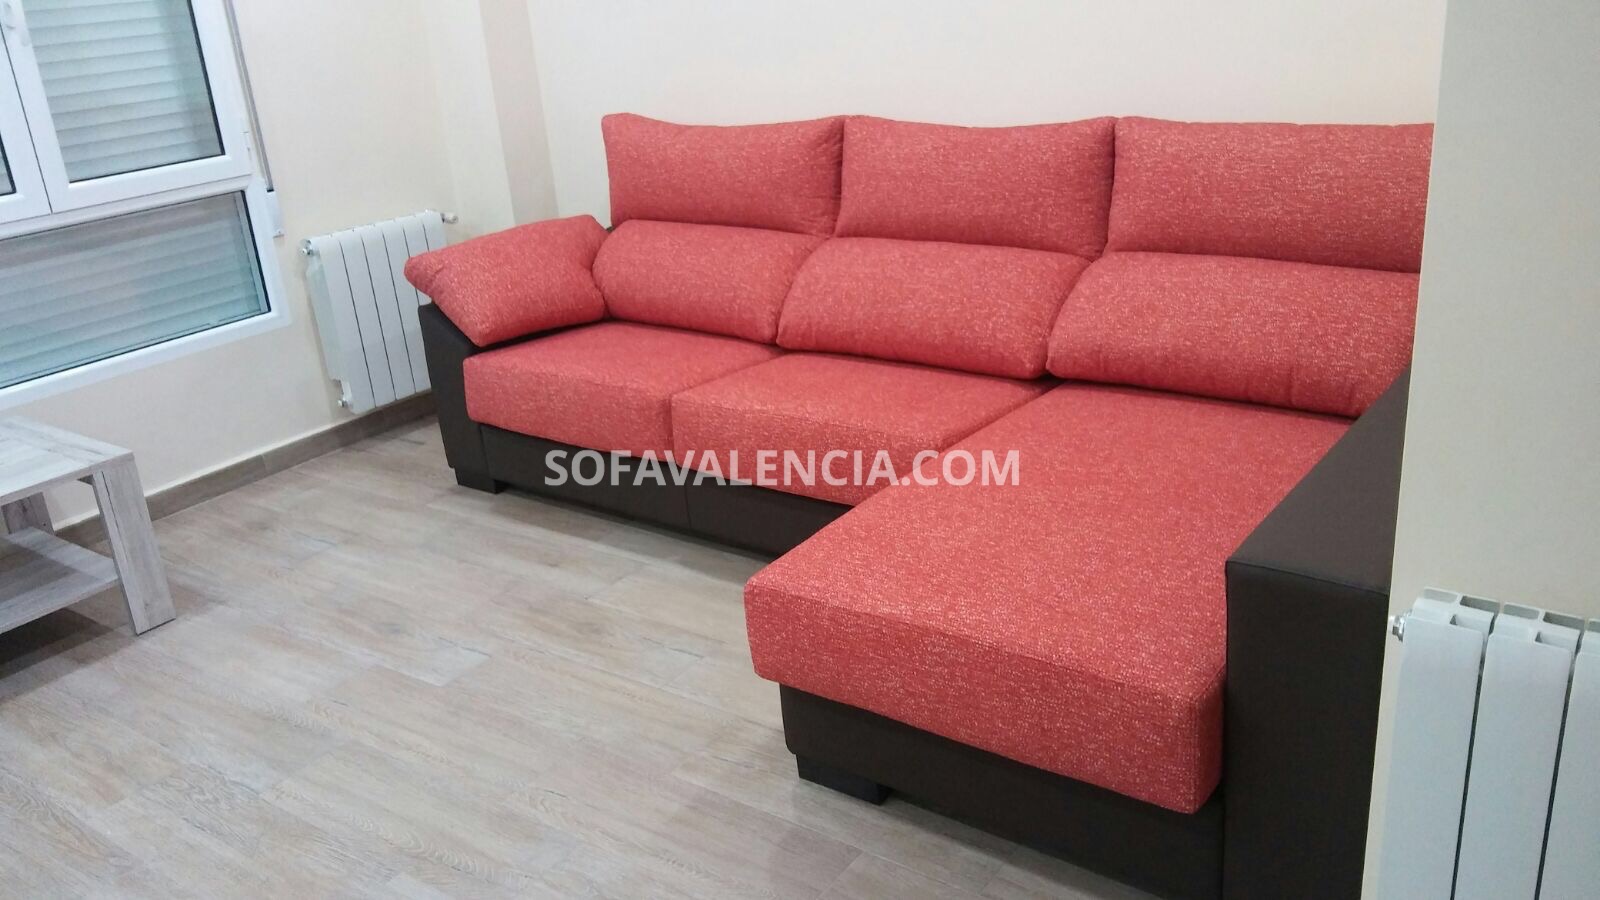 sofa-valencia-fotos-clientes-78